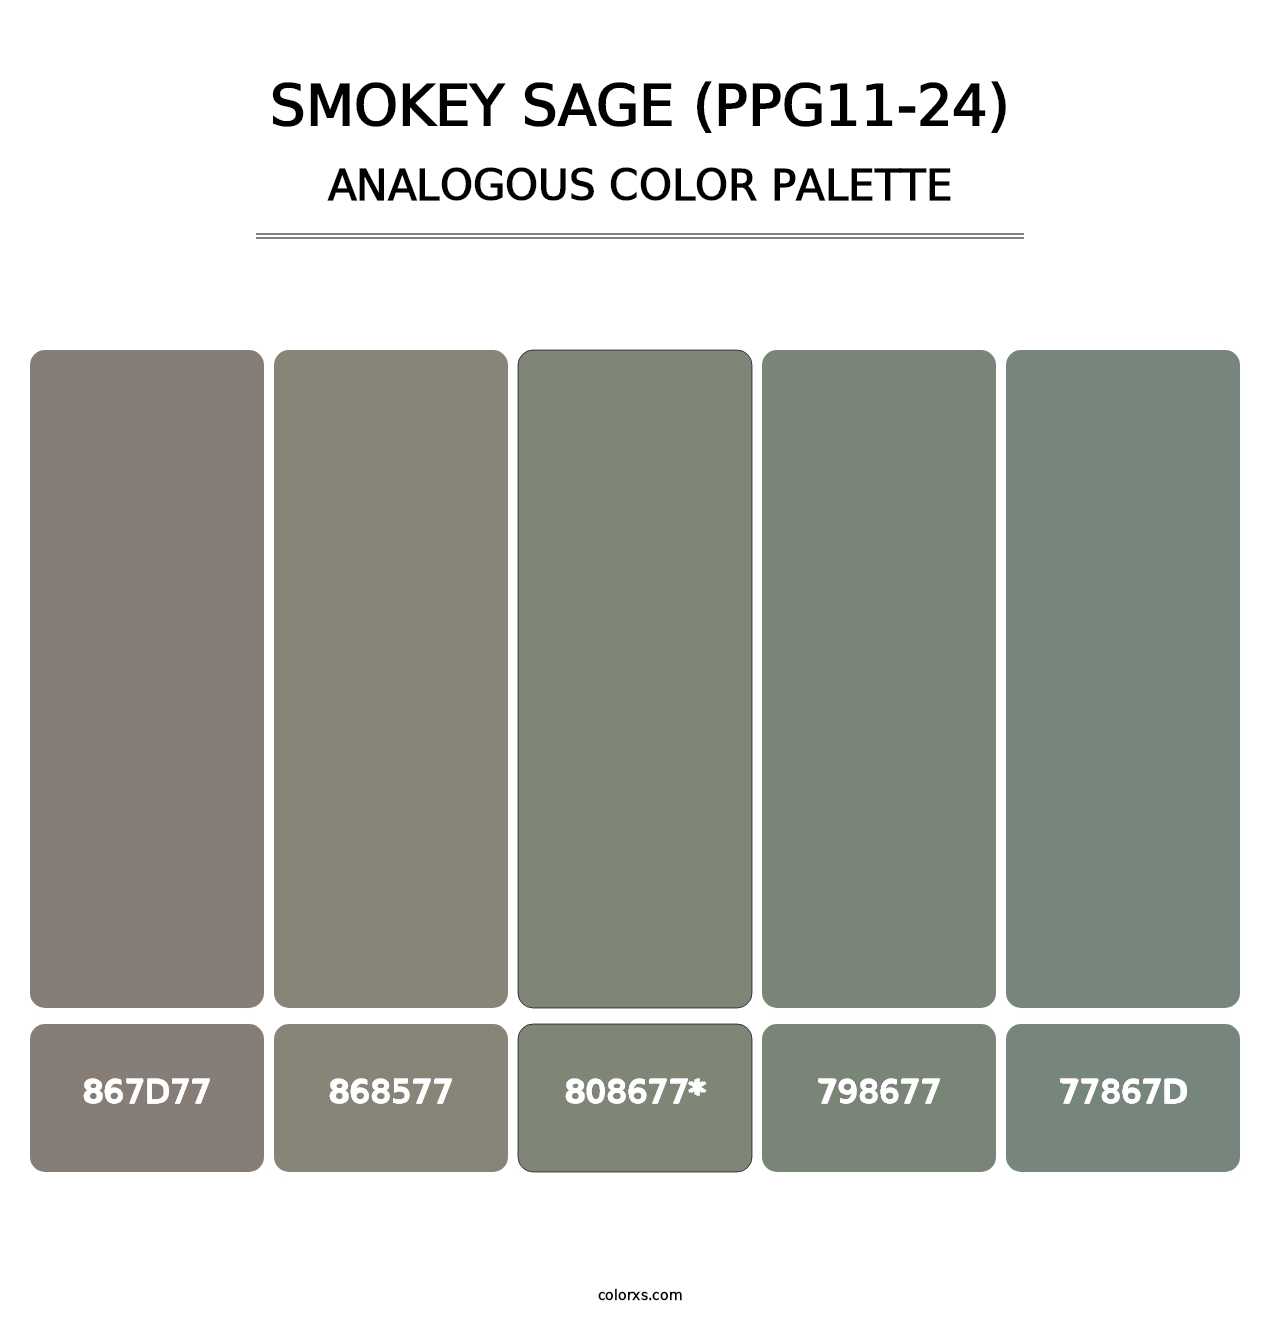 Smokey Sage (PPG11-24) - Analogous Color Palette